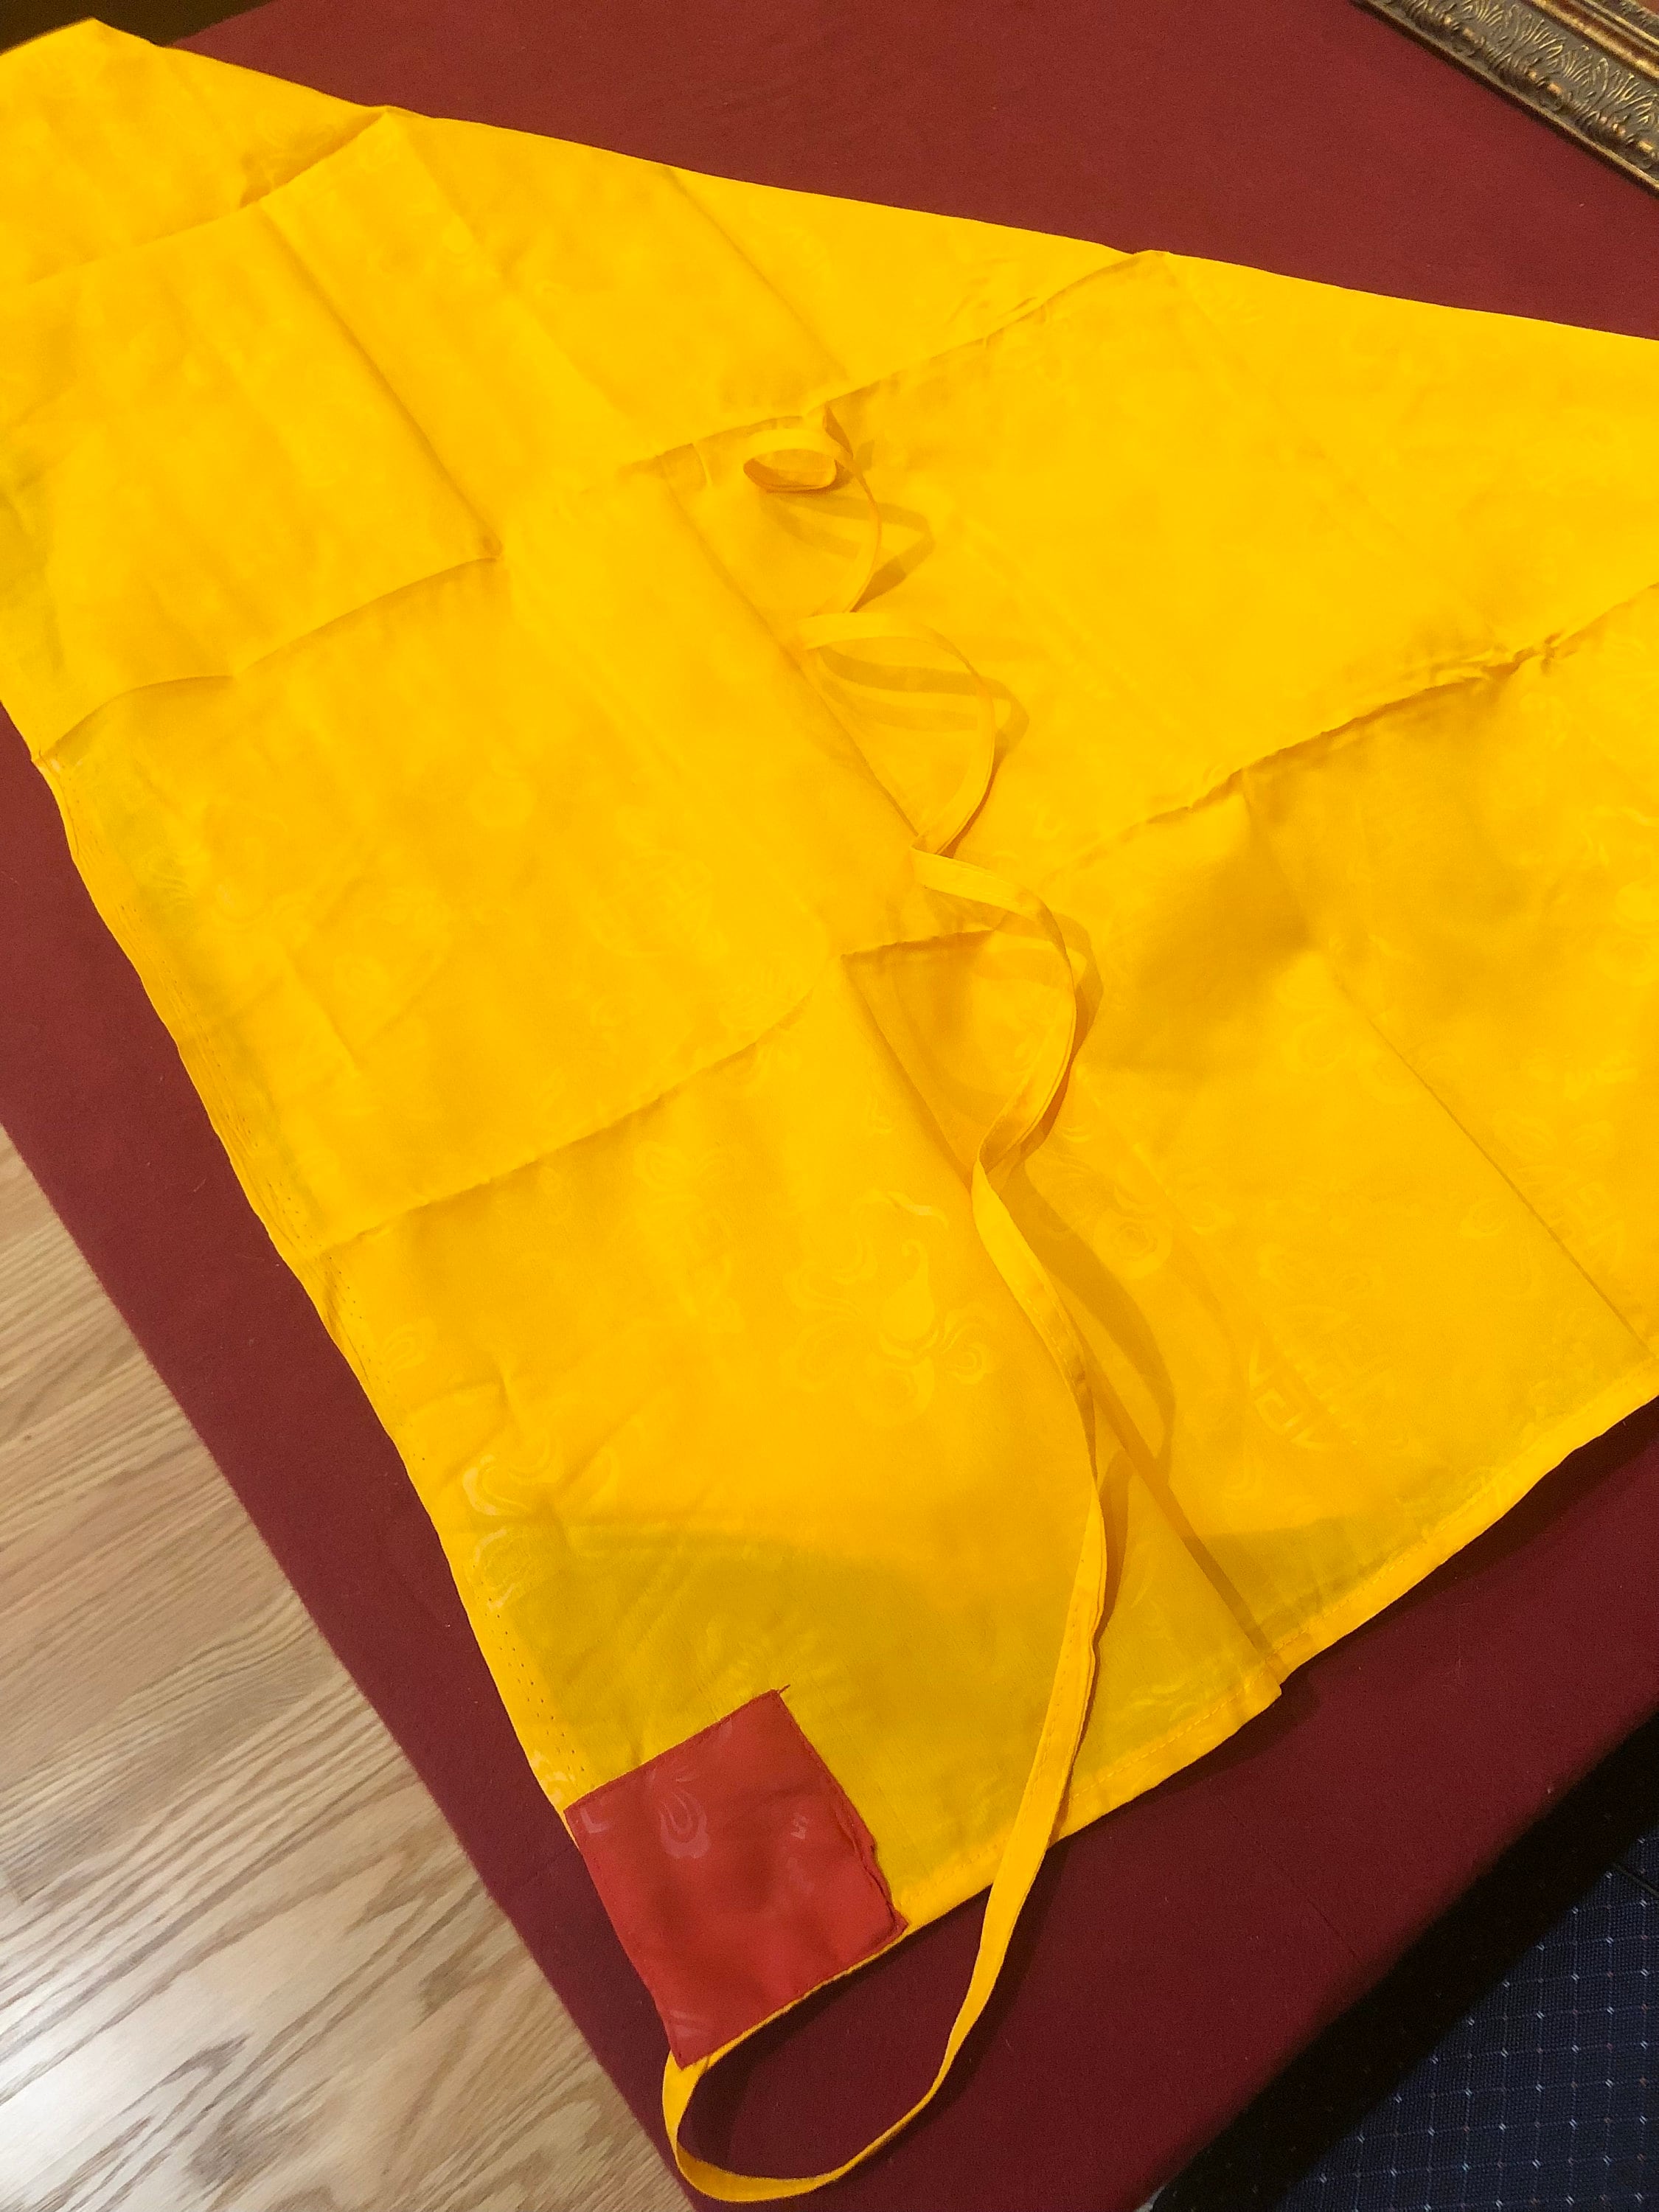 Book X Book Etsy Puja Cloth or Handmade 34 Saffron Cloth Tibetan Nepal Mandala Cotton in - Color Tibetan Inches Text 34 Cover